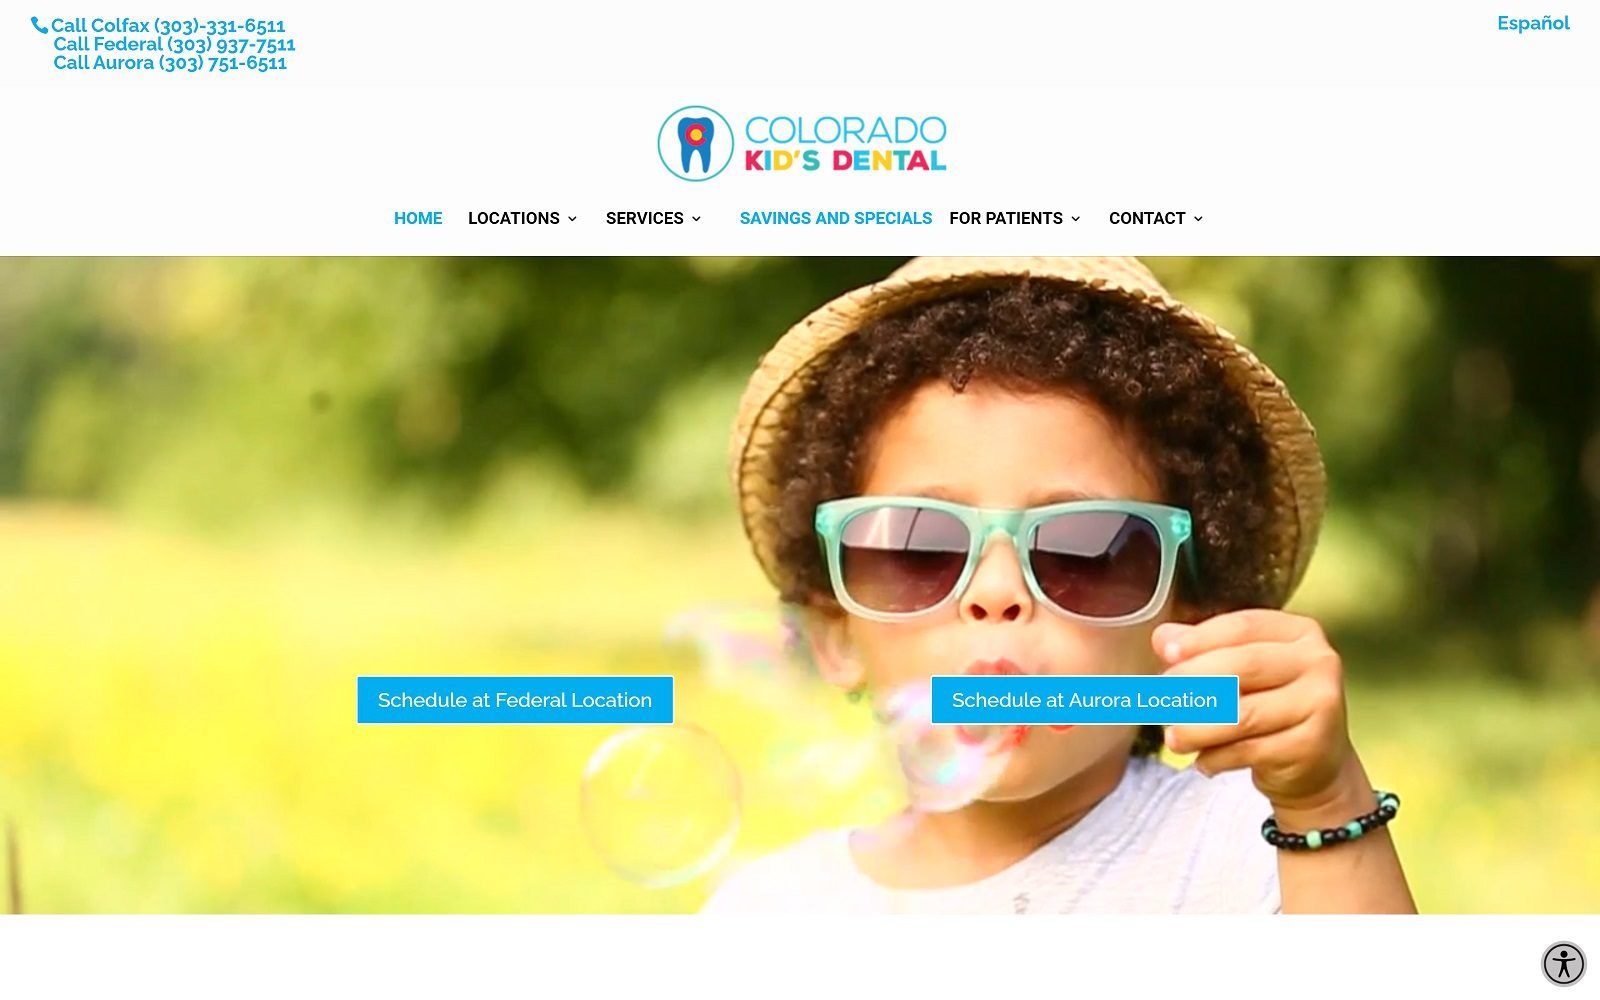 The screenshot of kid's dental website